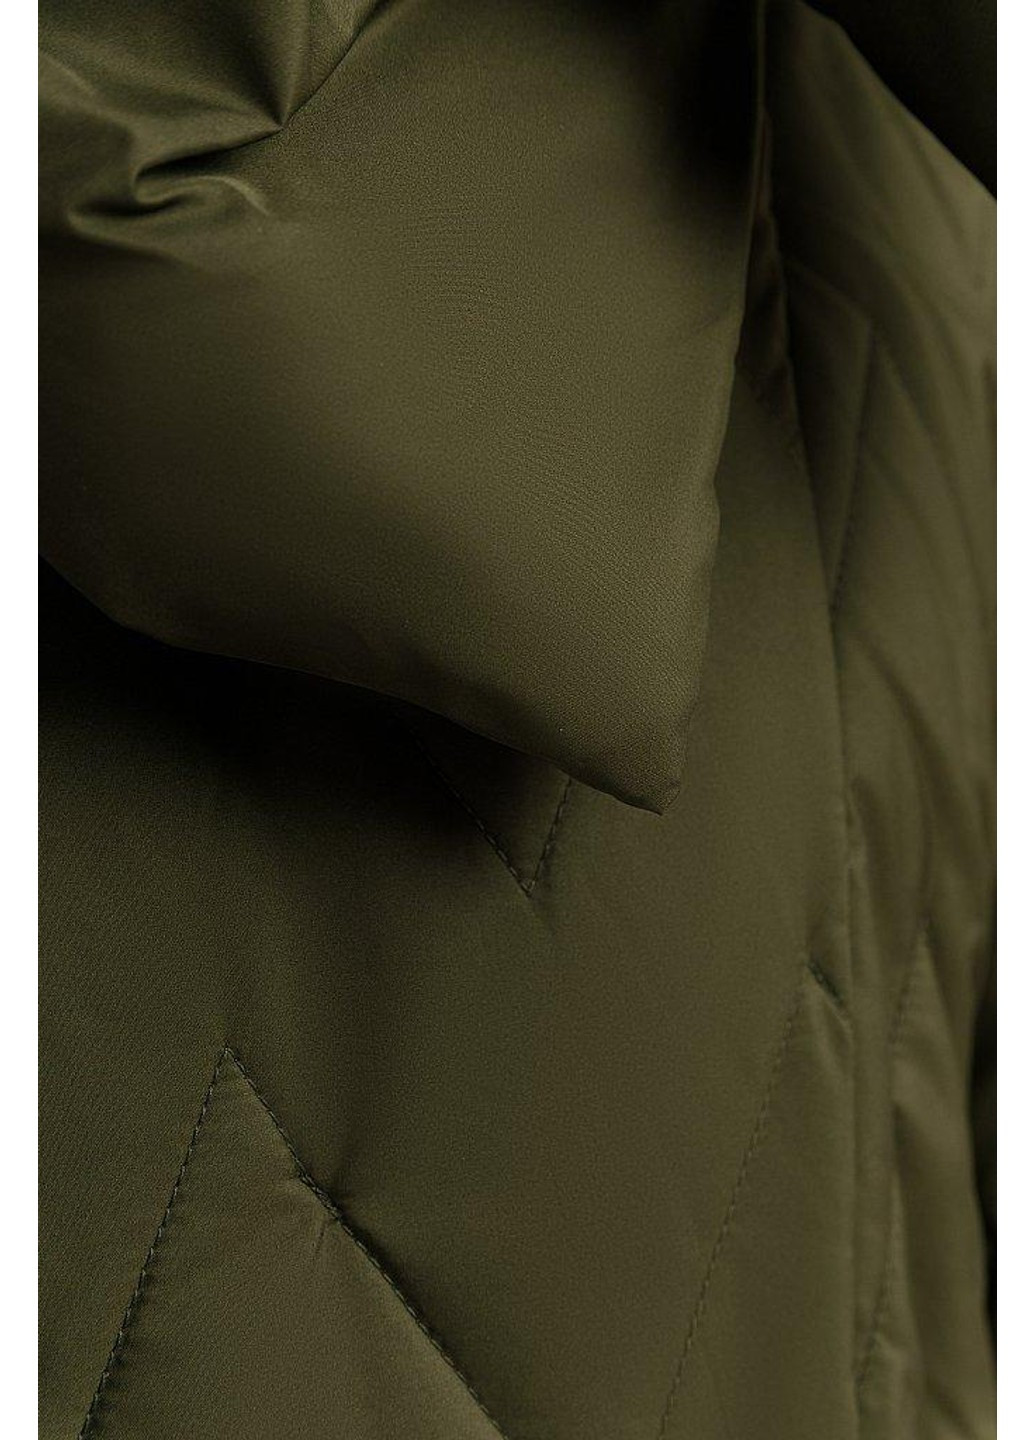 Зелена зимня зимове пальто w19-12018-507 Finn Flare